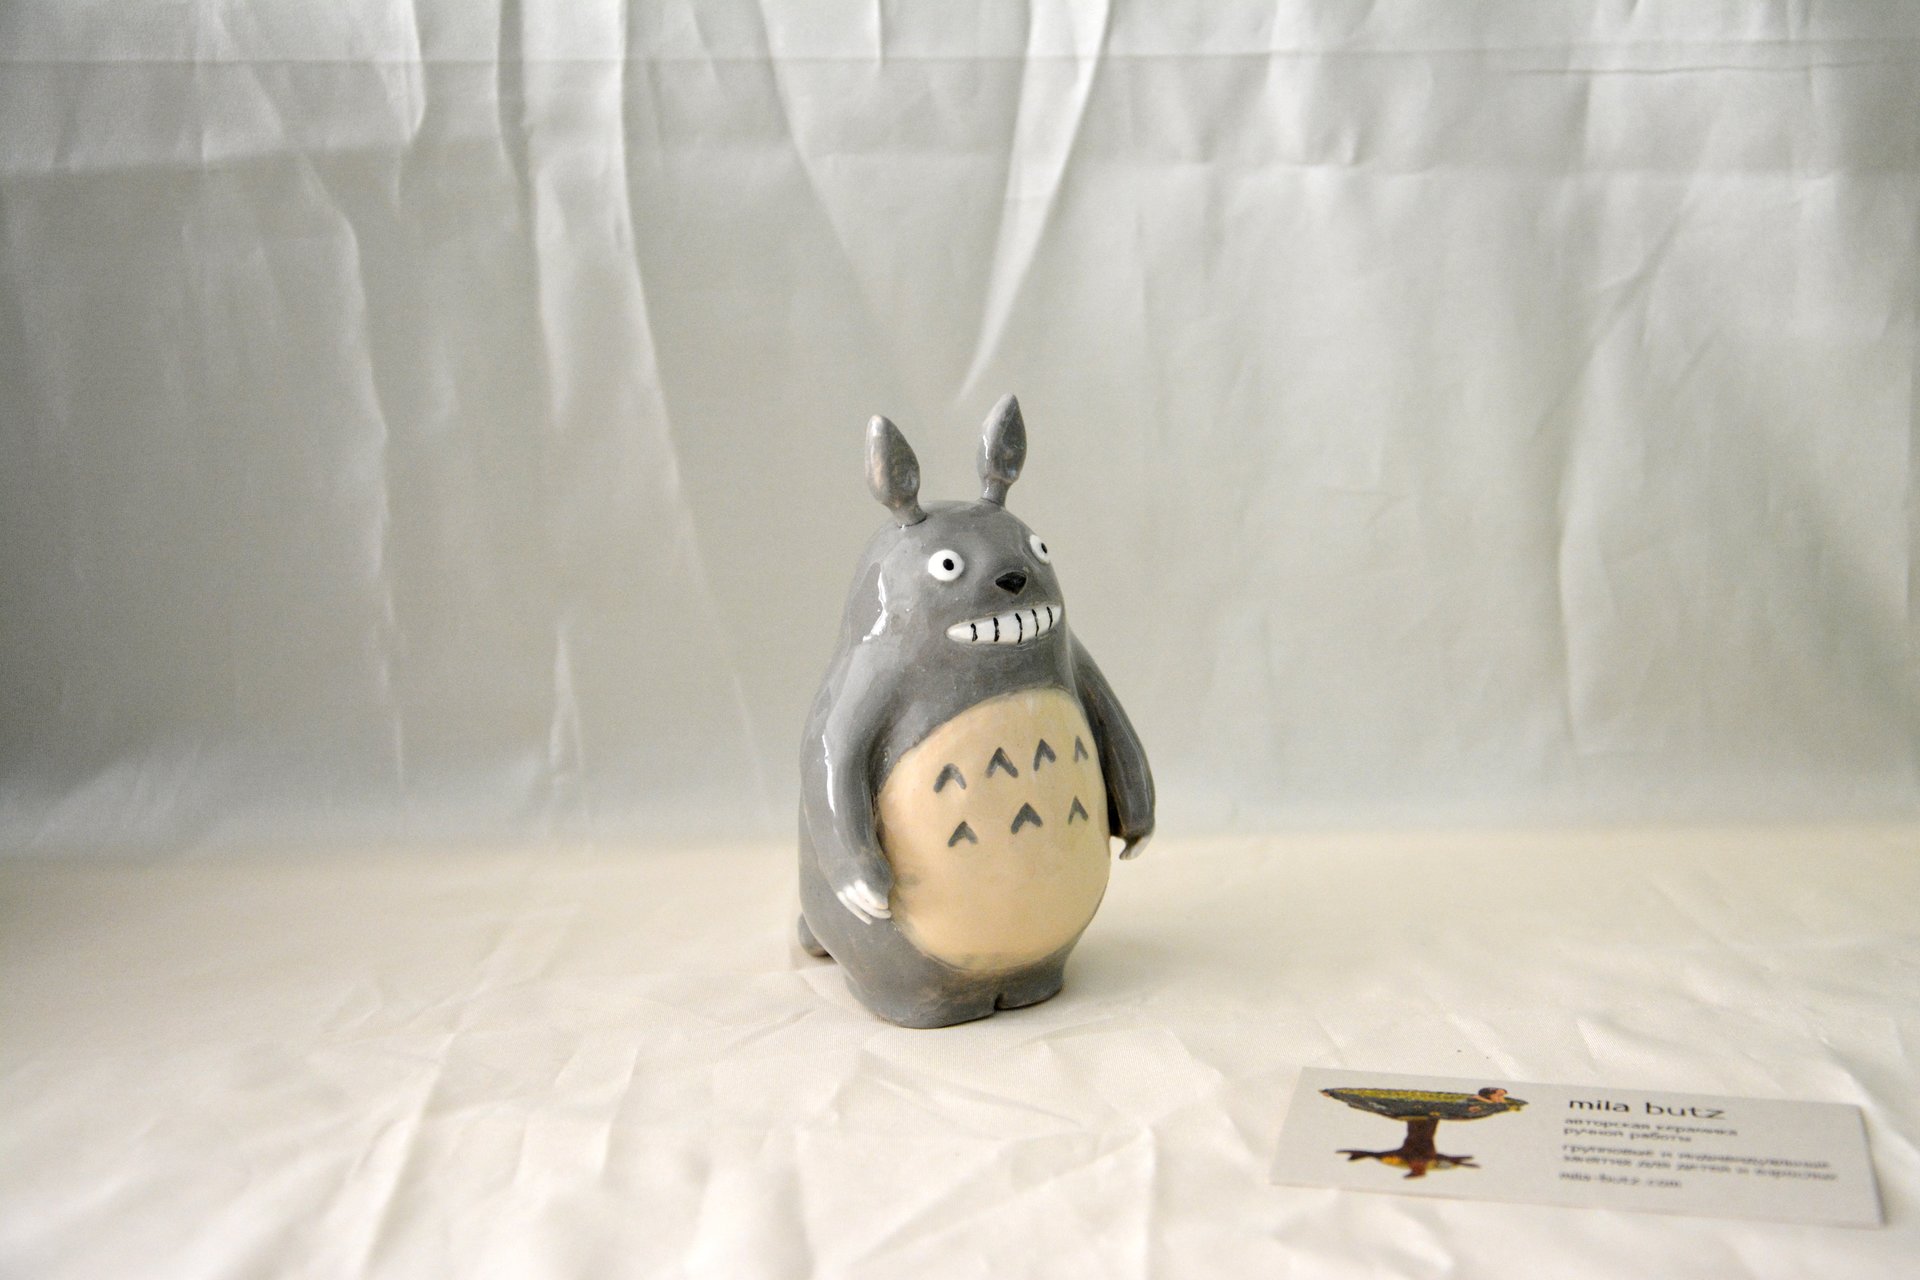 Ceramic figurine Totoro, height - 11 cm, photo 4 of 5.